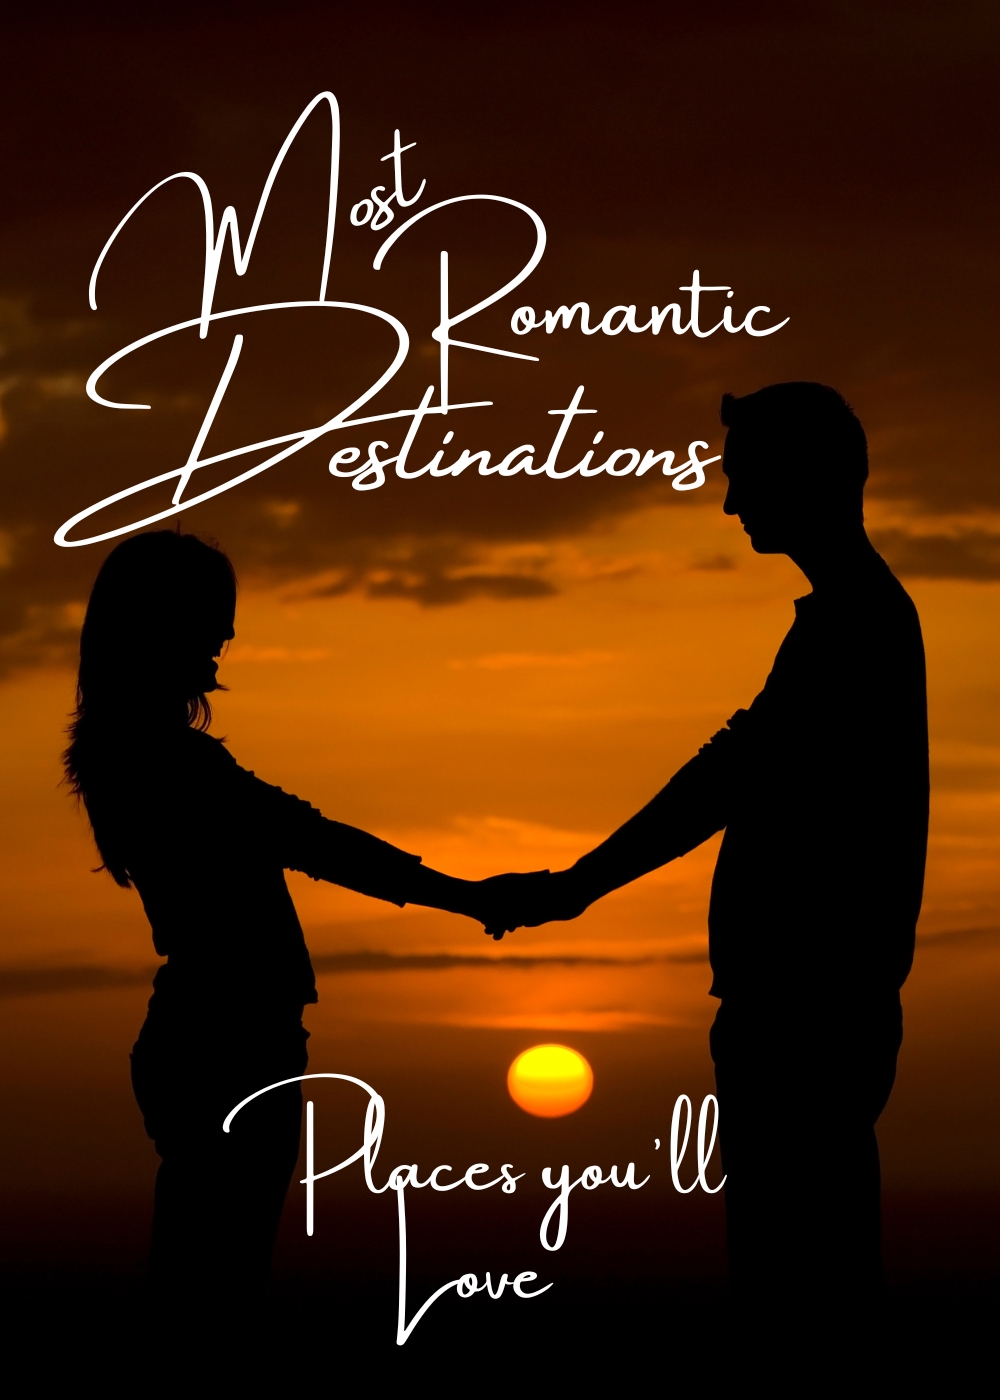 Most romantic destinations Honeymoon destinations renew your wedding vows romantic places to travel to